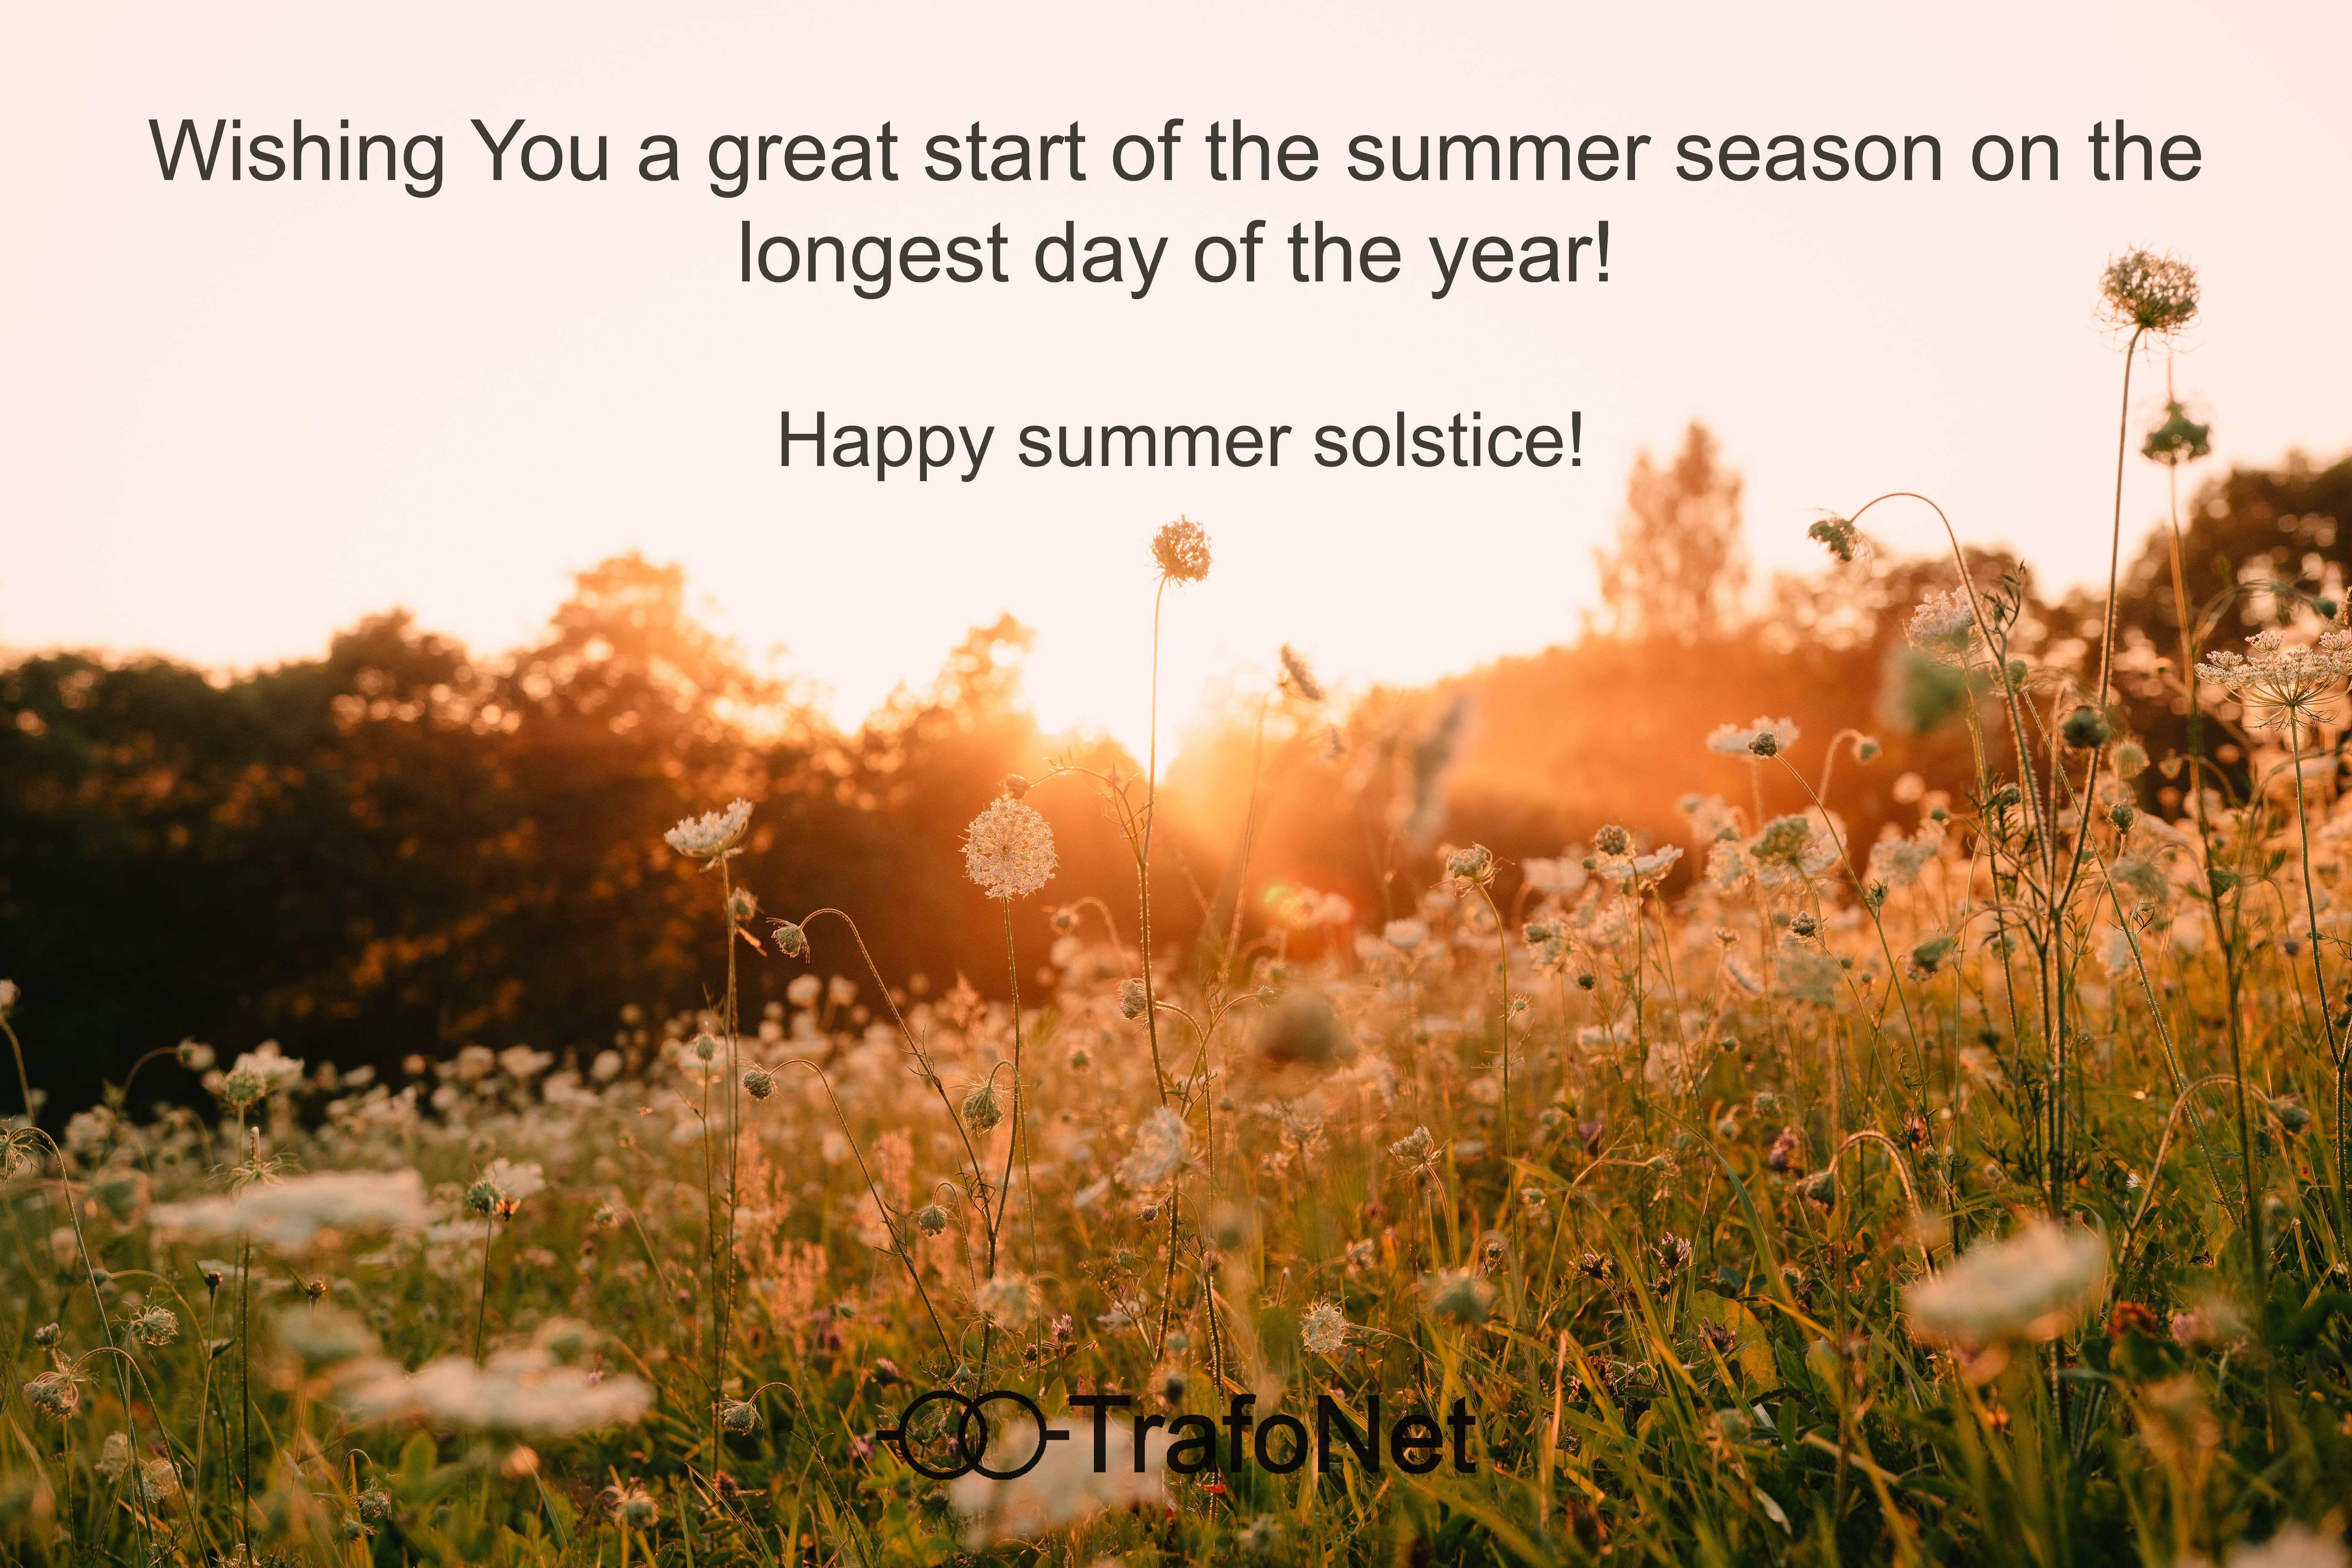 Happy summer solstice!